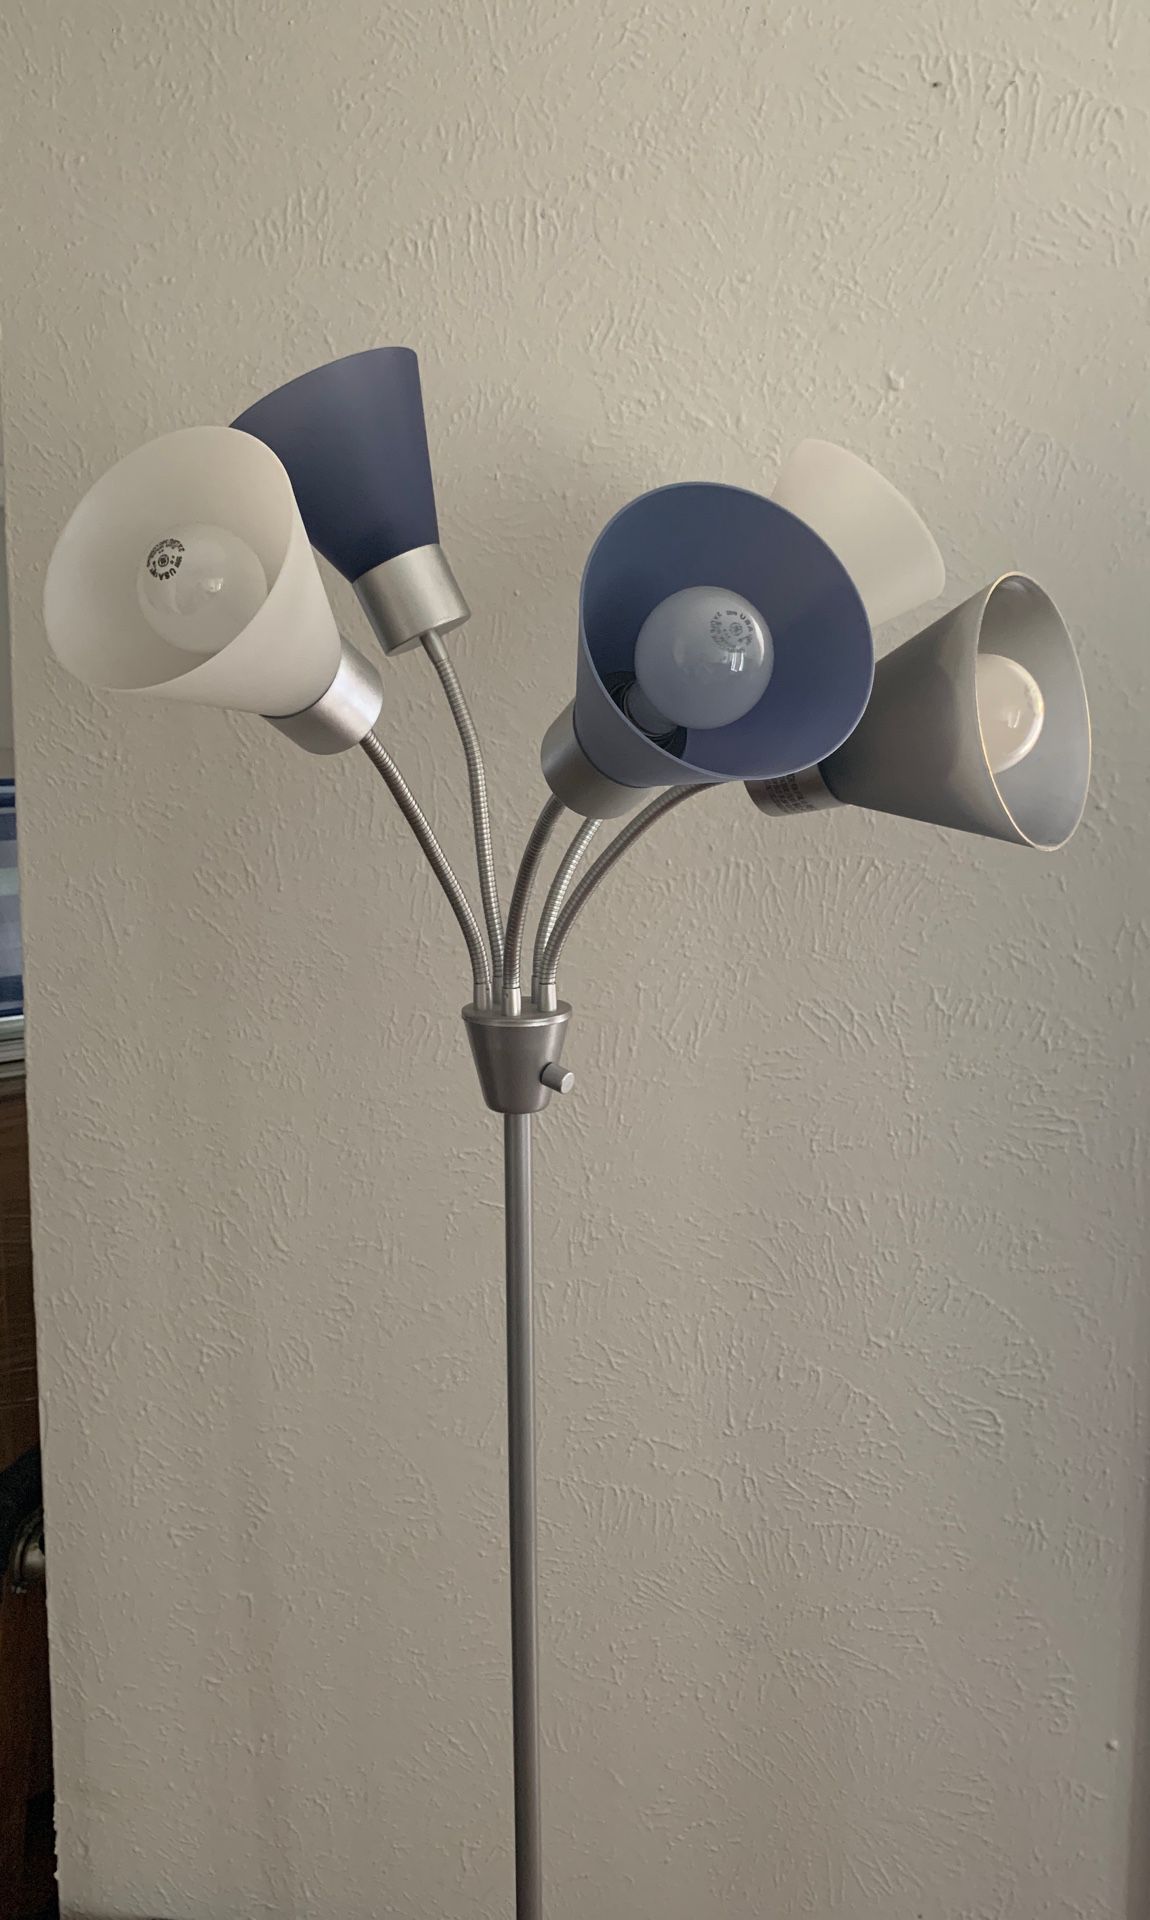 5-Bulb Floor Lamp - Blue, Gray, and White